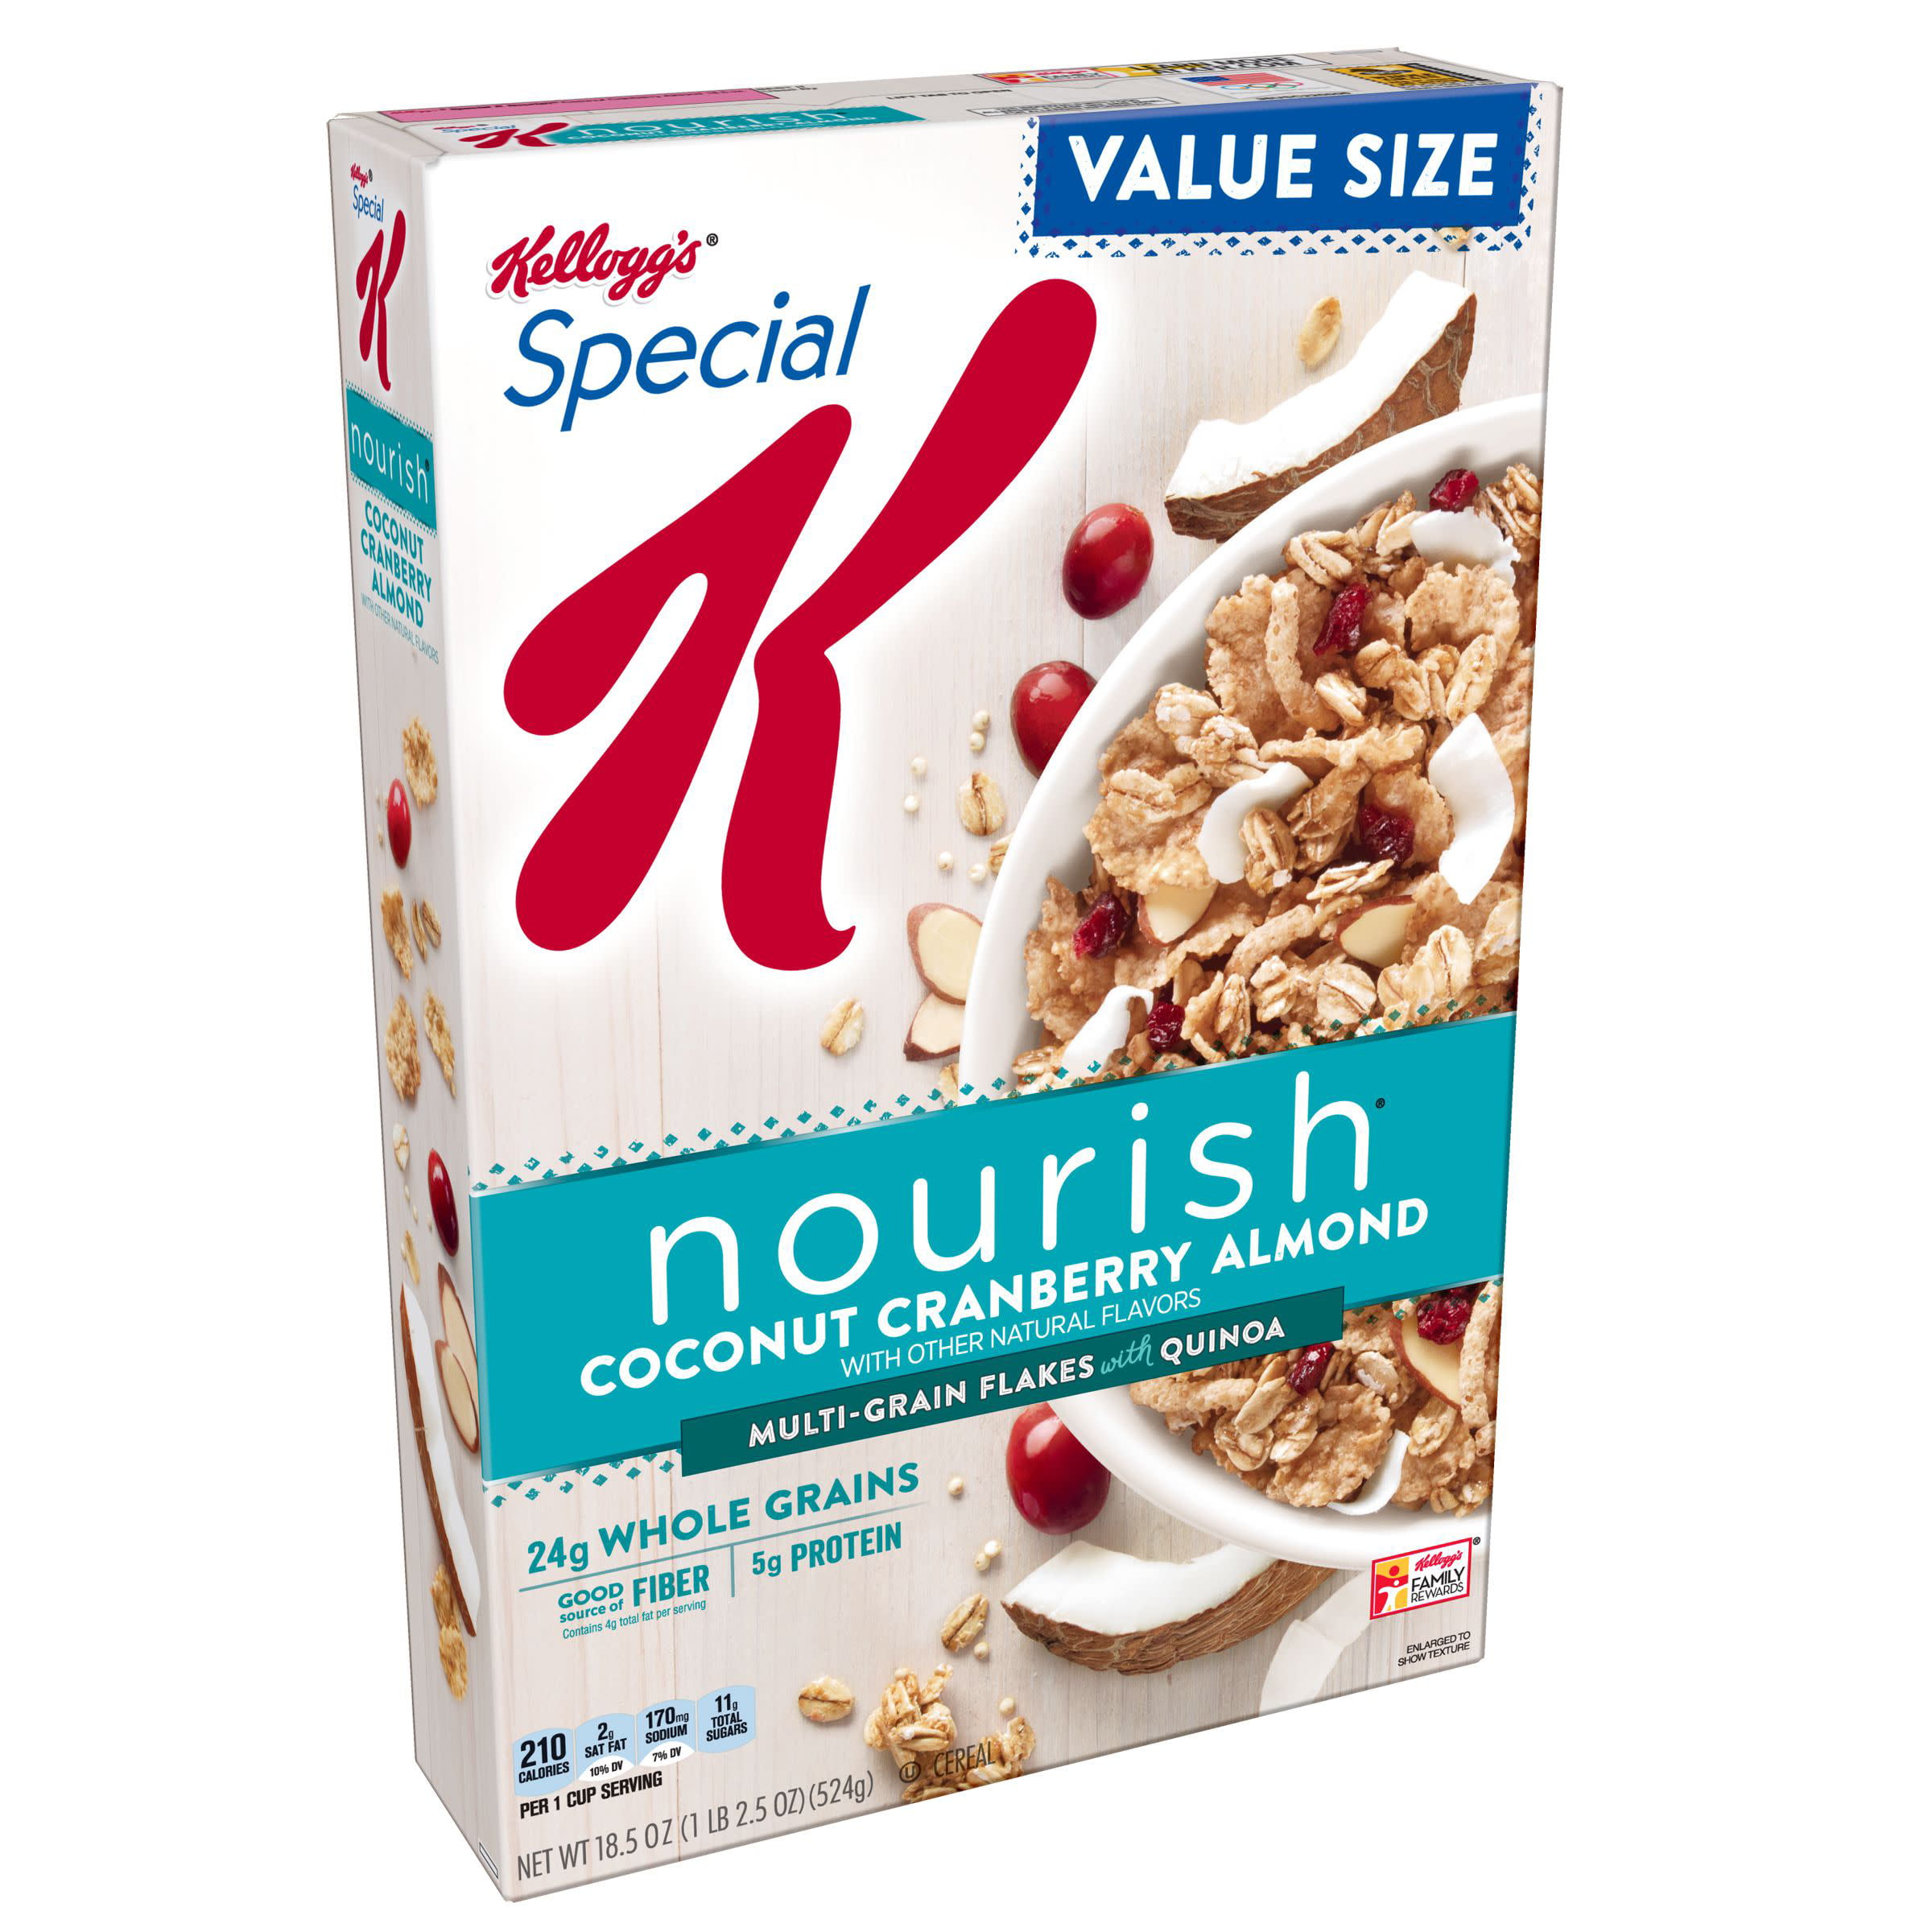 Kellogg's Special K Nourish Coconut Cranberry & Almond Breakfast Cereal, 18.5 oz